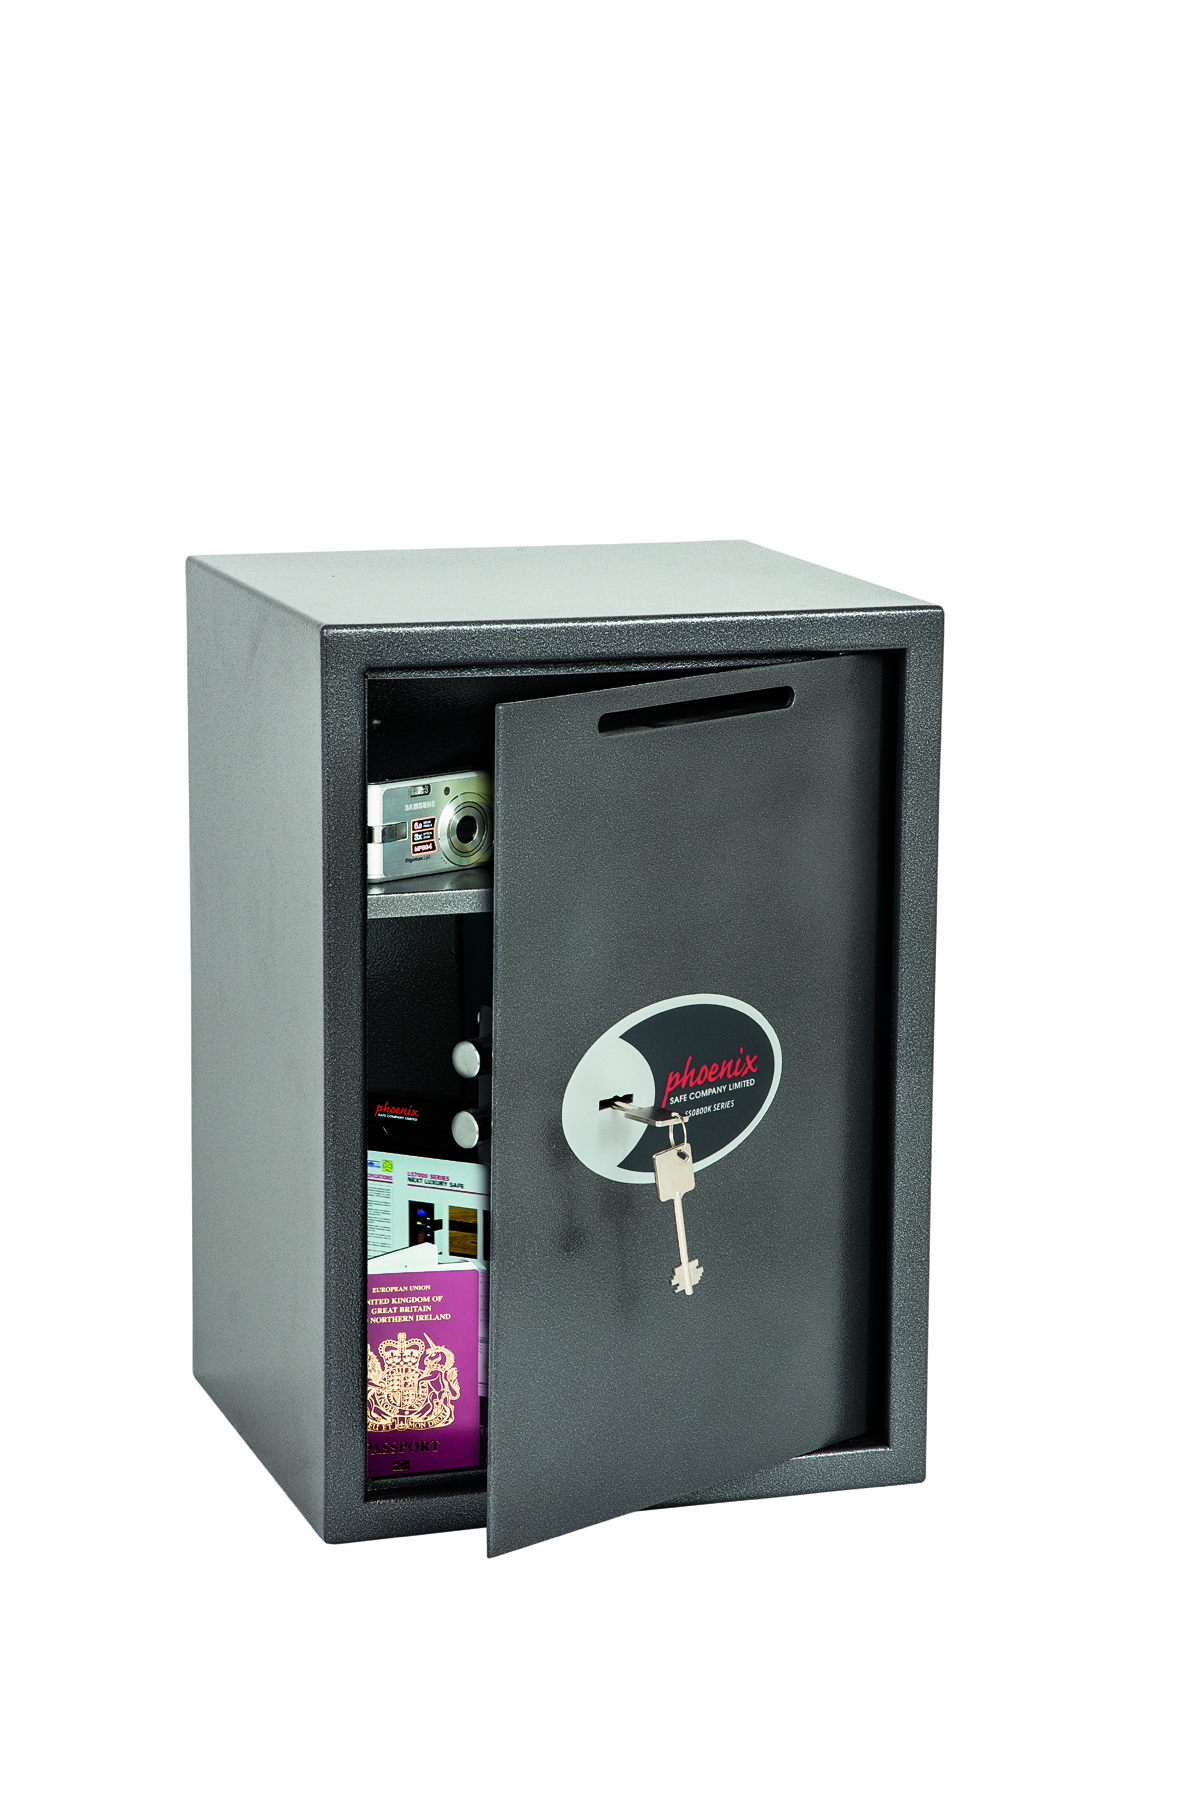 Phoenix Vela Deposit Home and Office Size 4 Safe Key Lock Graphite Grey SS0804KD